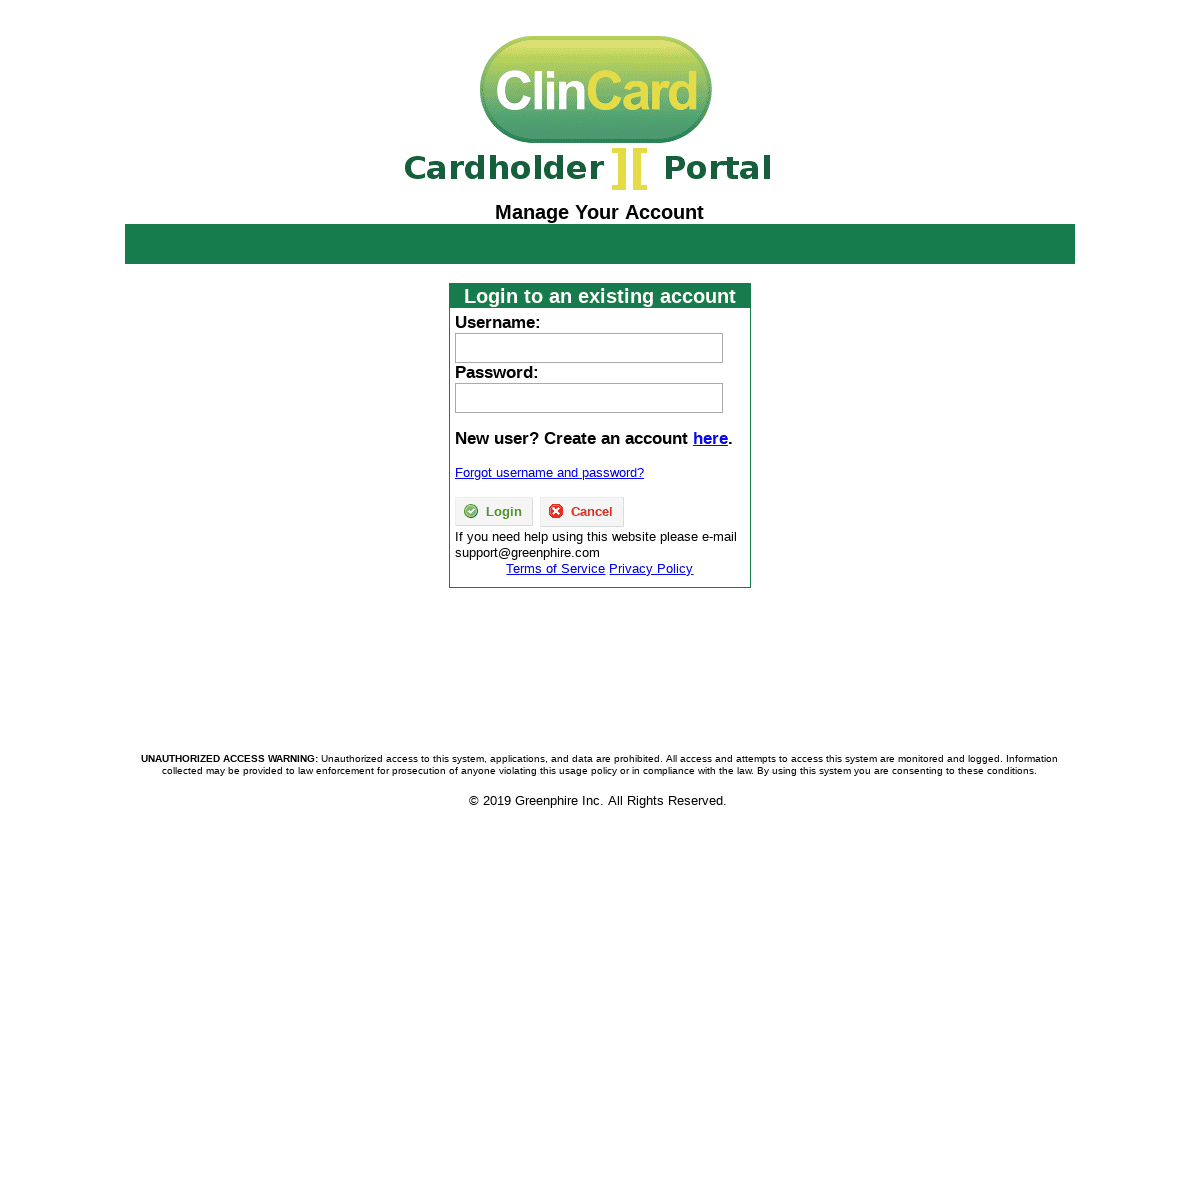 A complete backup of myclincard.com